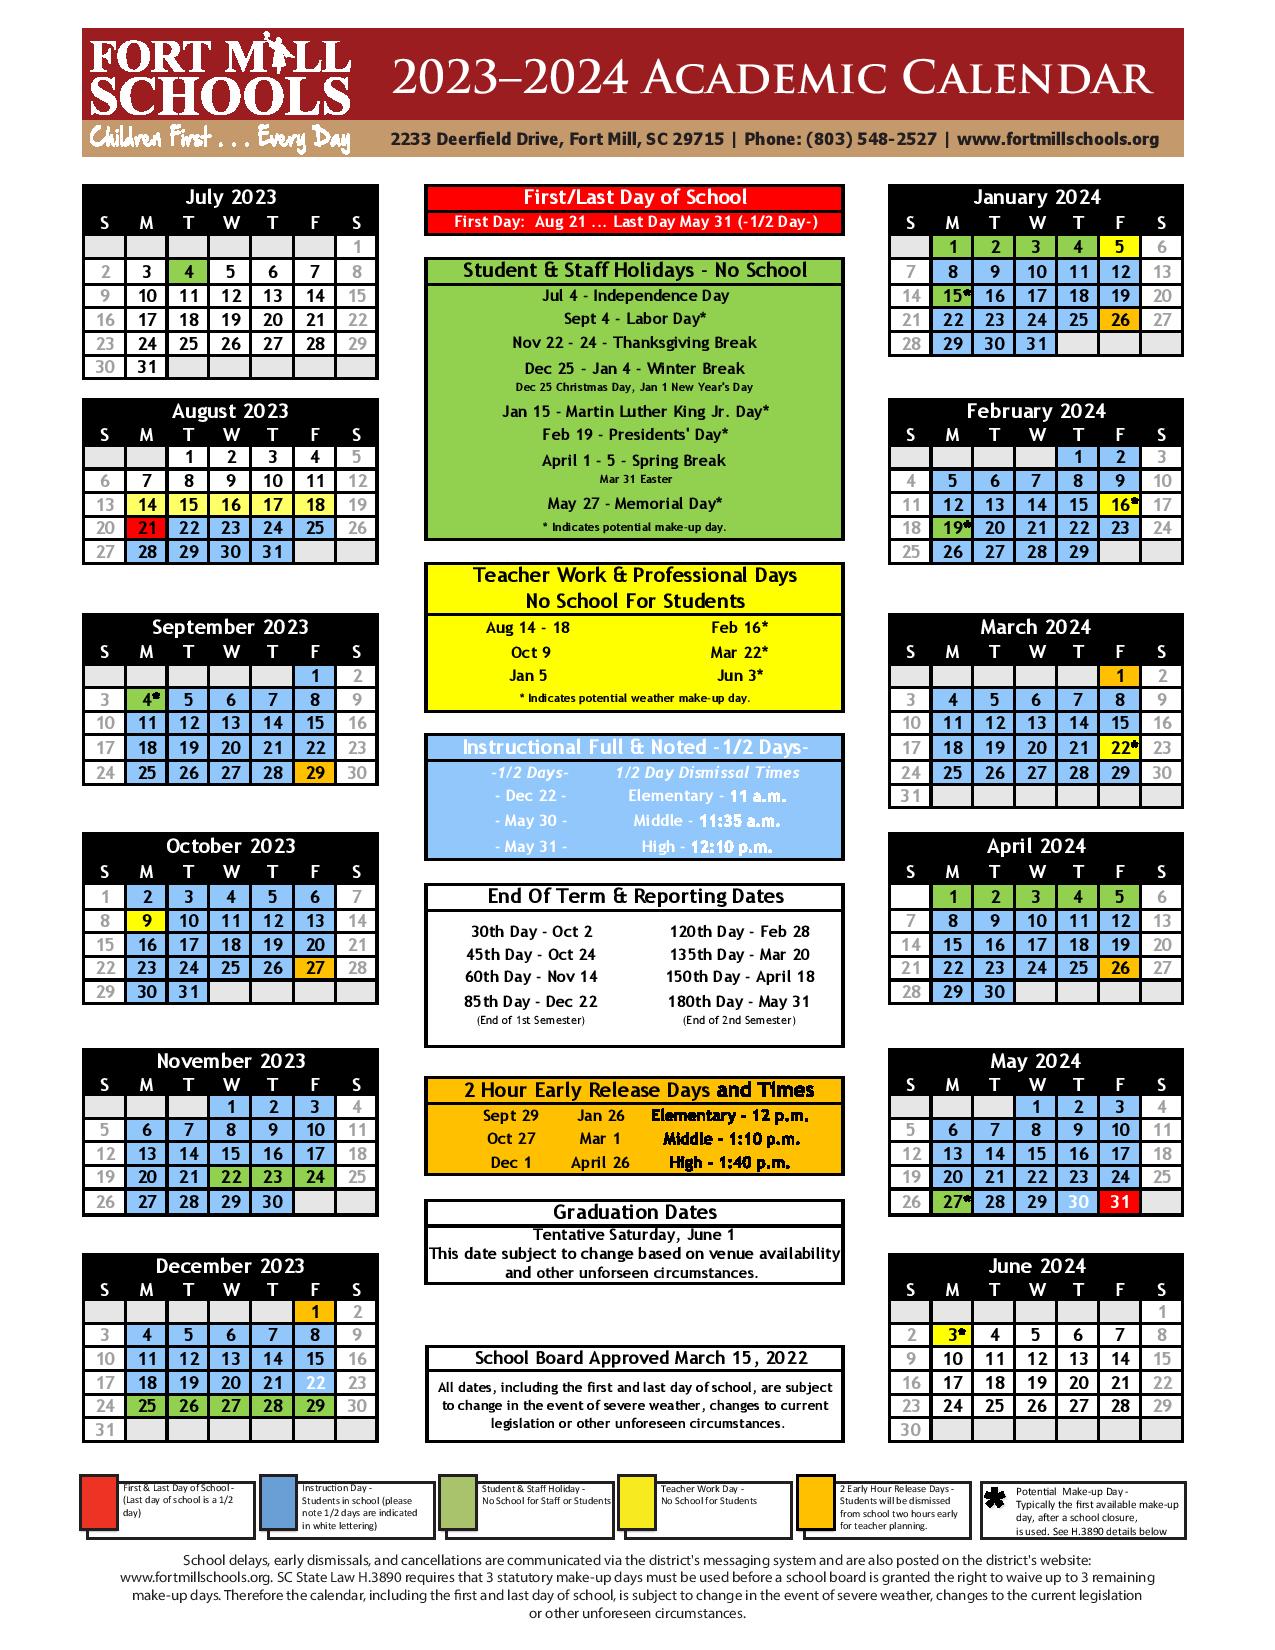 Fort Mill School District Calendar 20232024 in PDF School Calendar Info